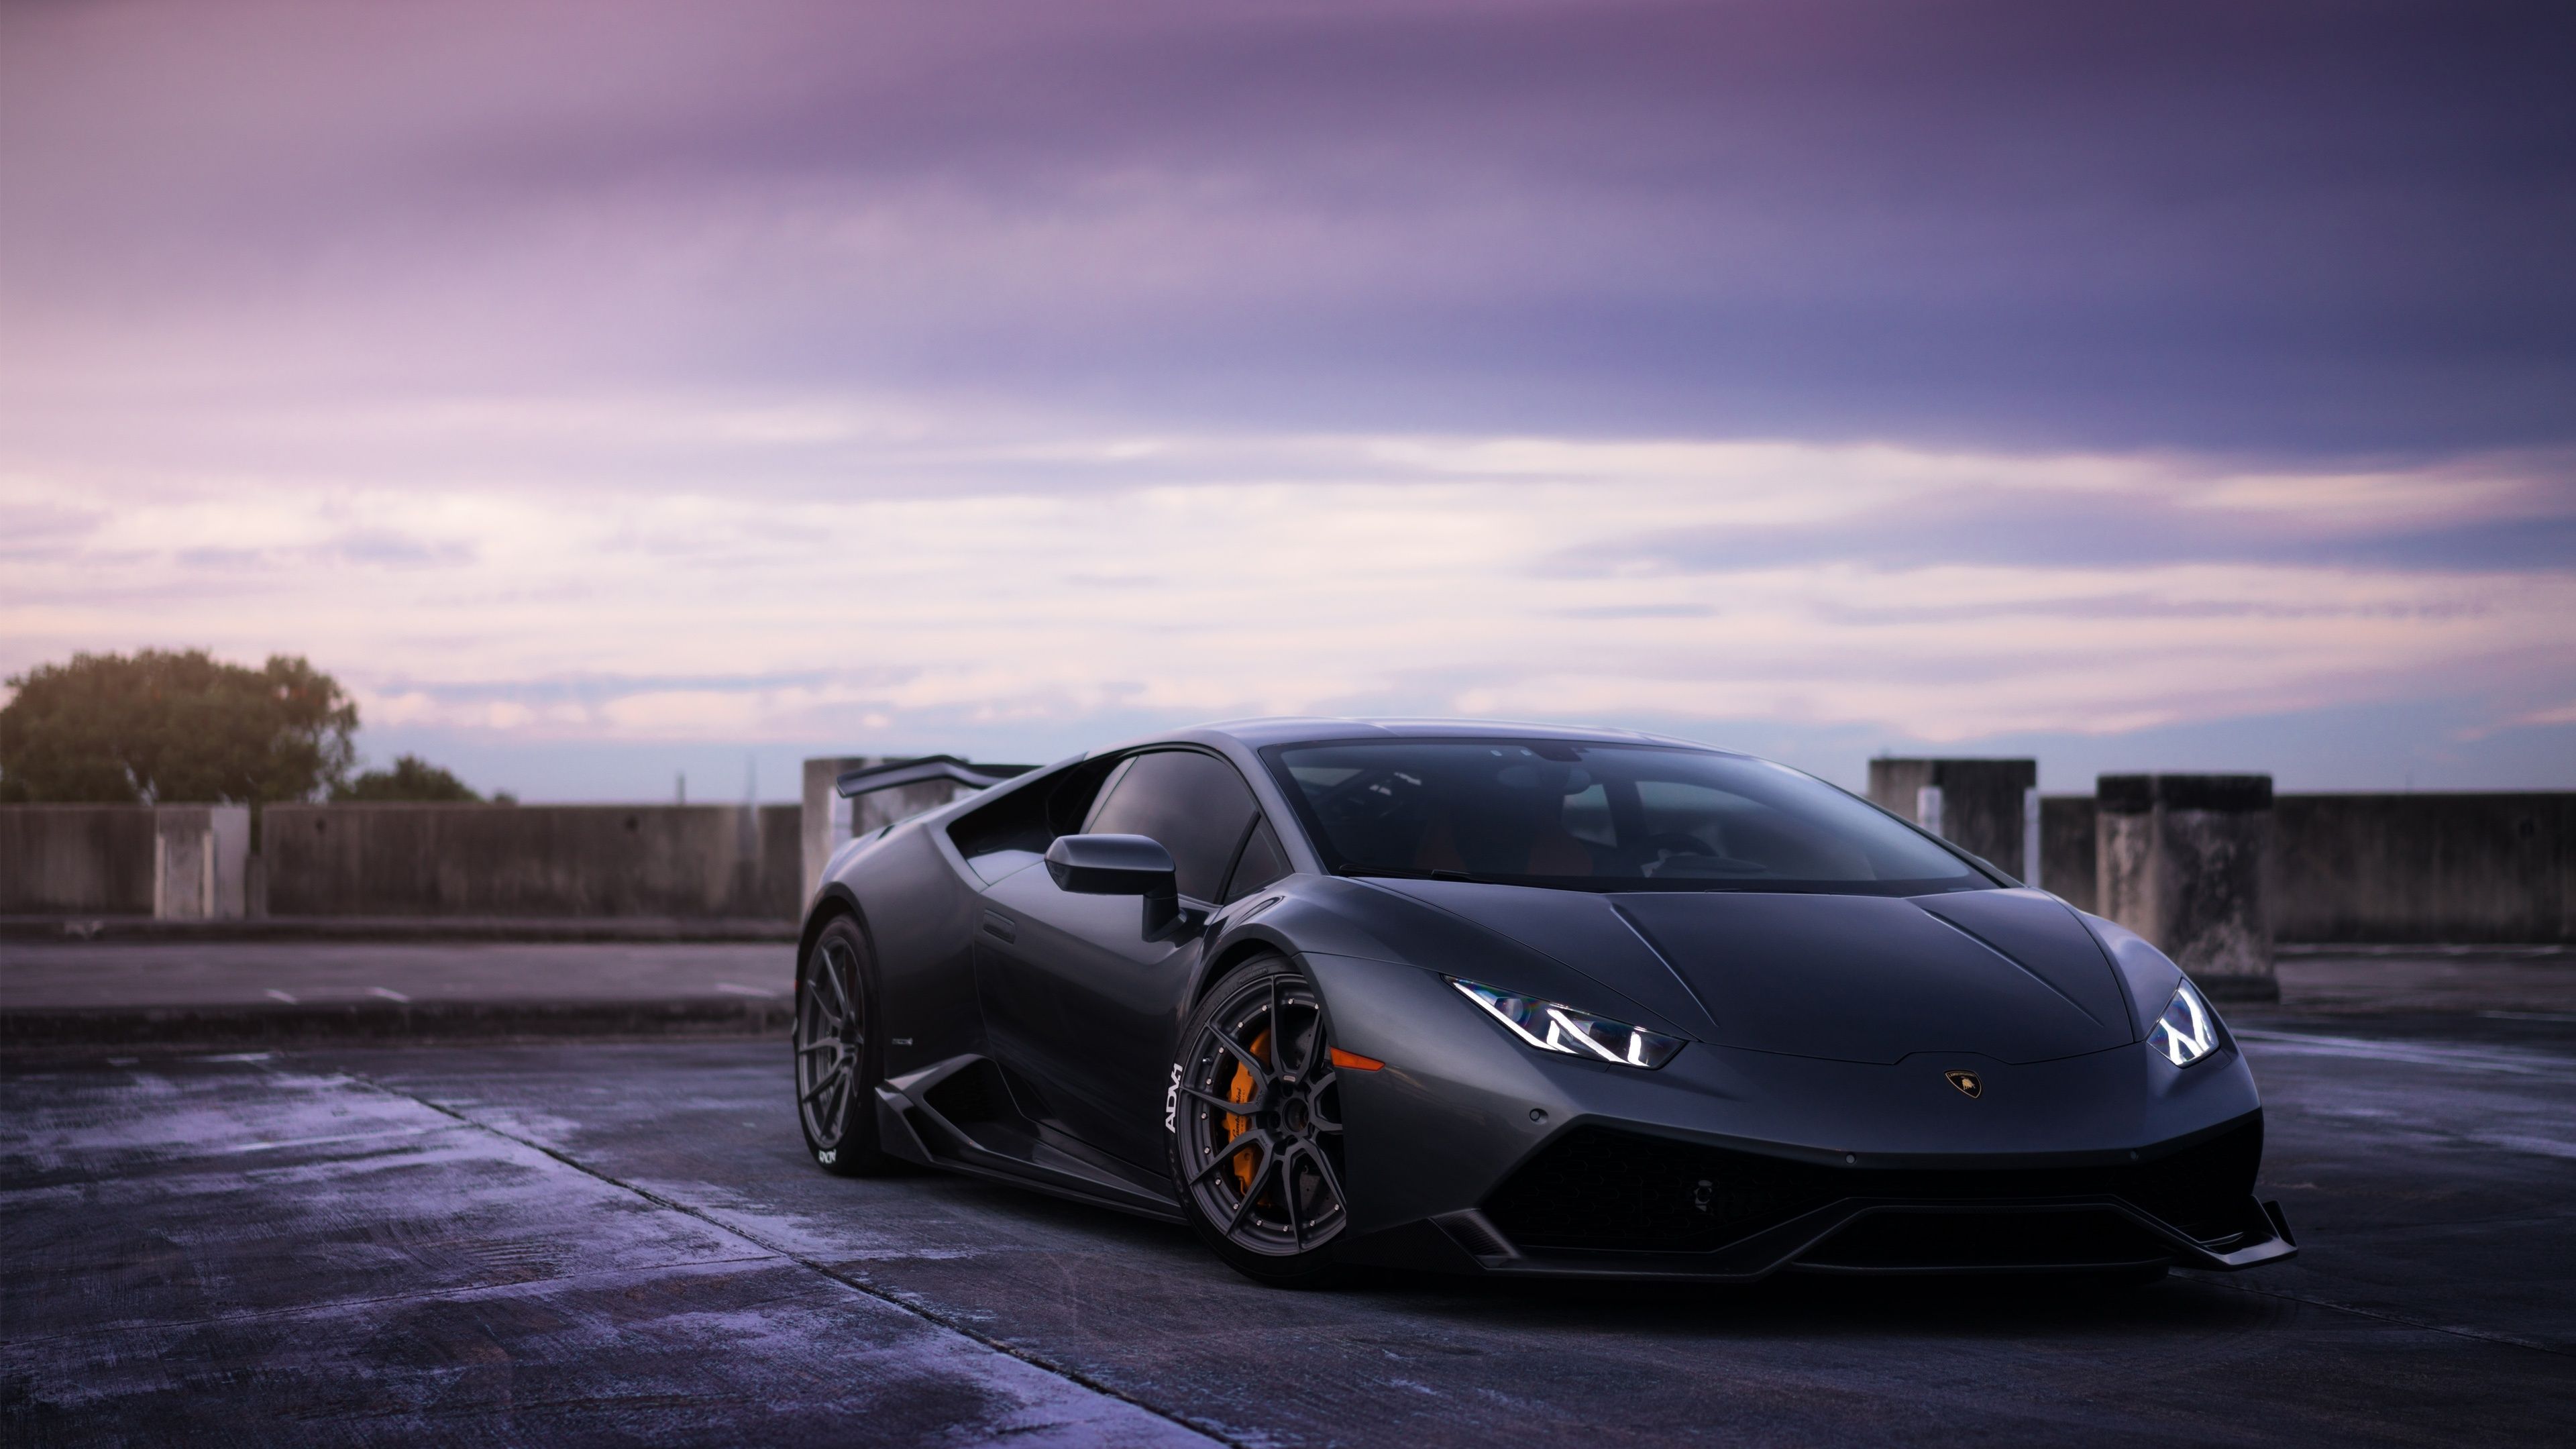 Fondos de Lamborghini - Los mejores fondos de Lamborghini gratis